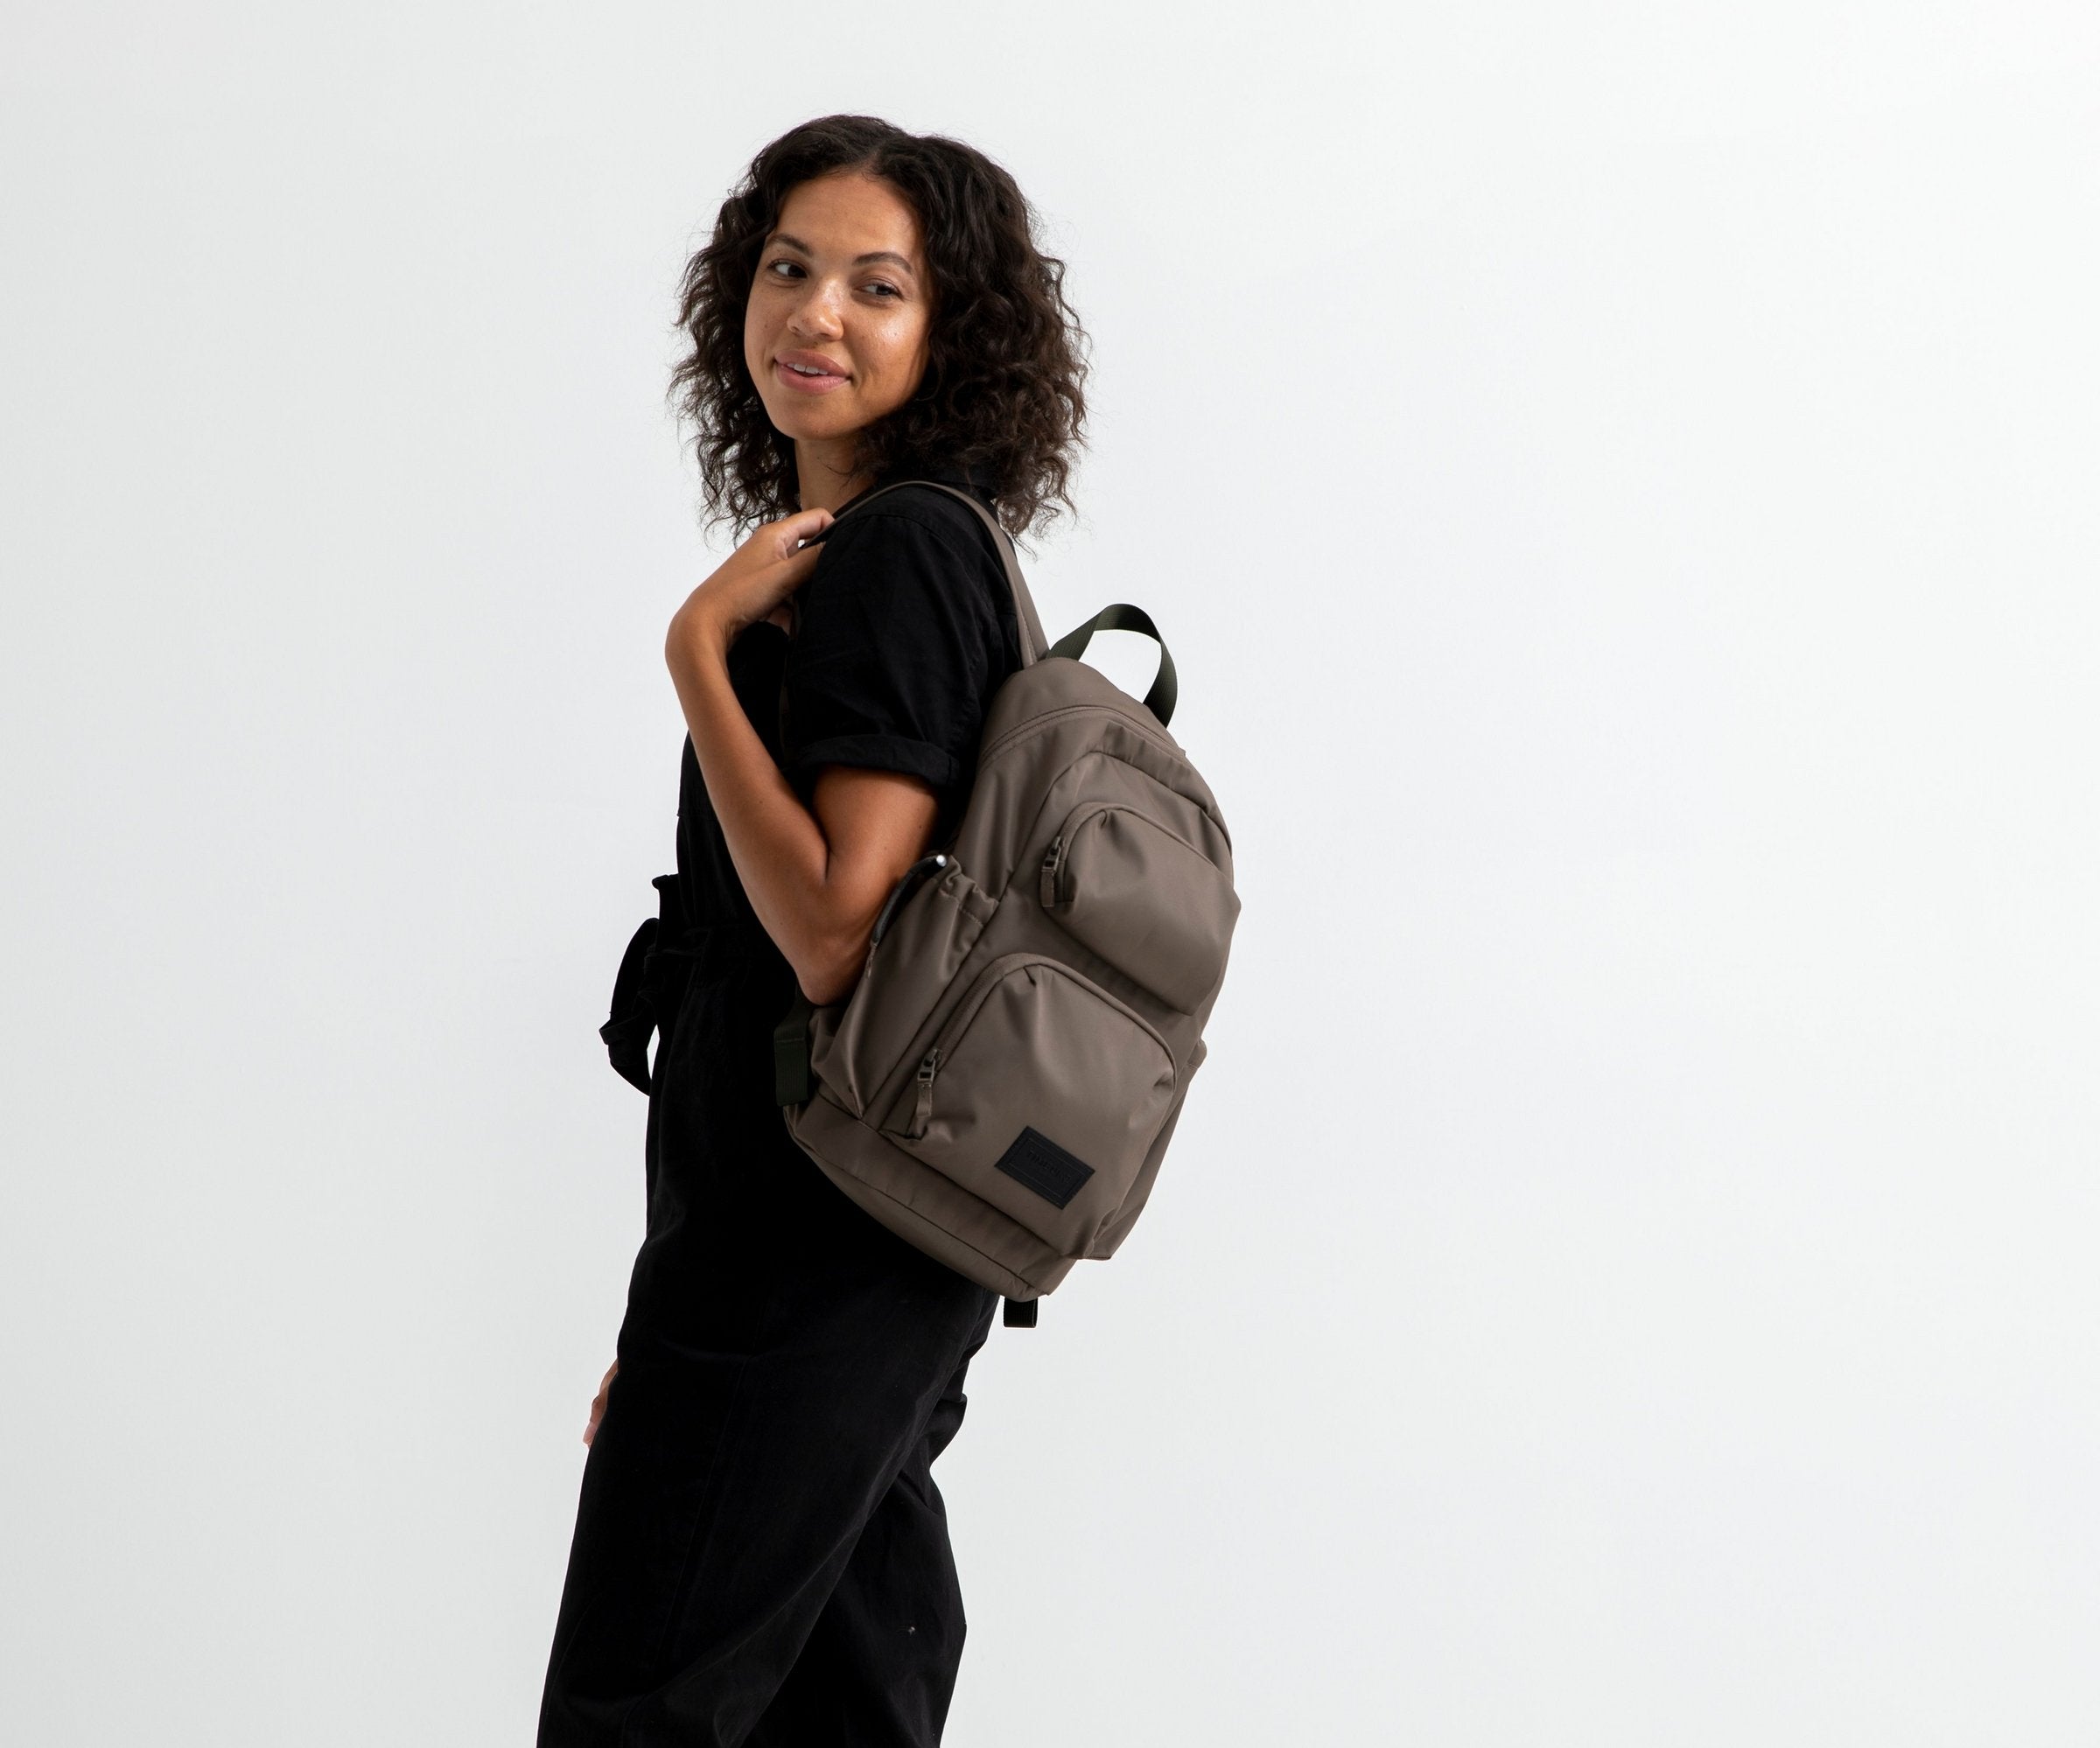 Timbuk2 Vapor Backpack | Warranty | Timbuk2bags